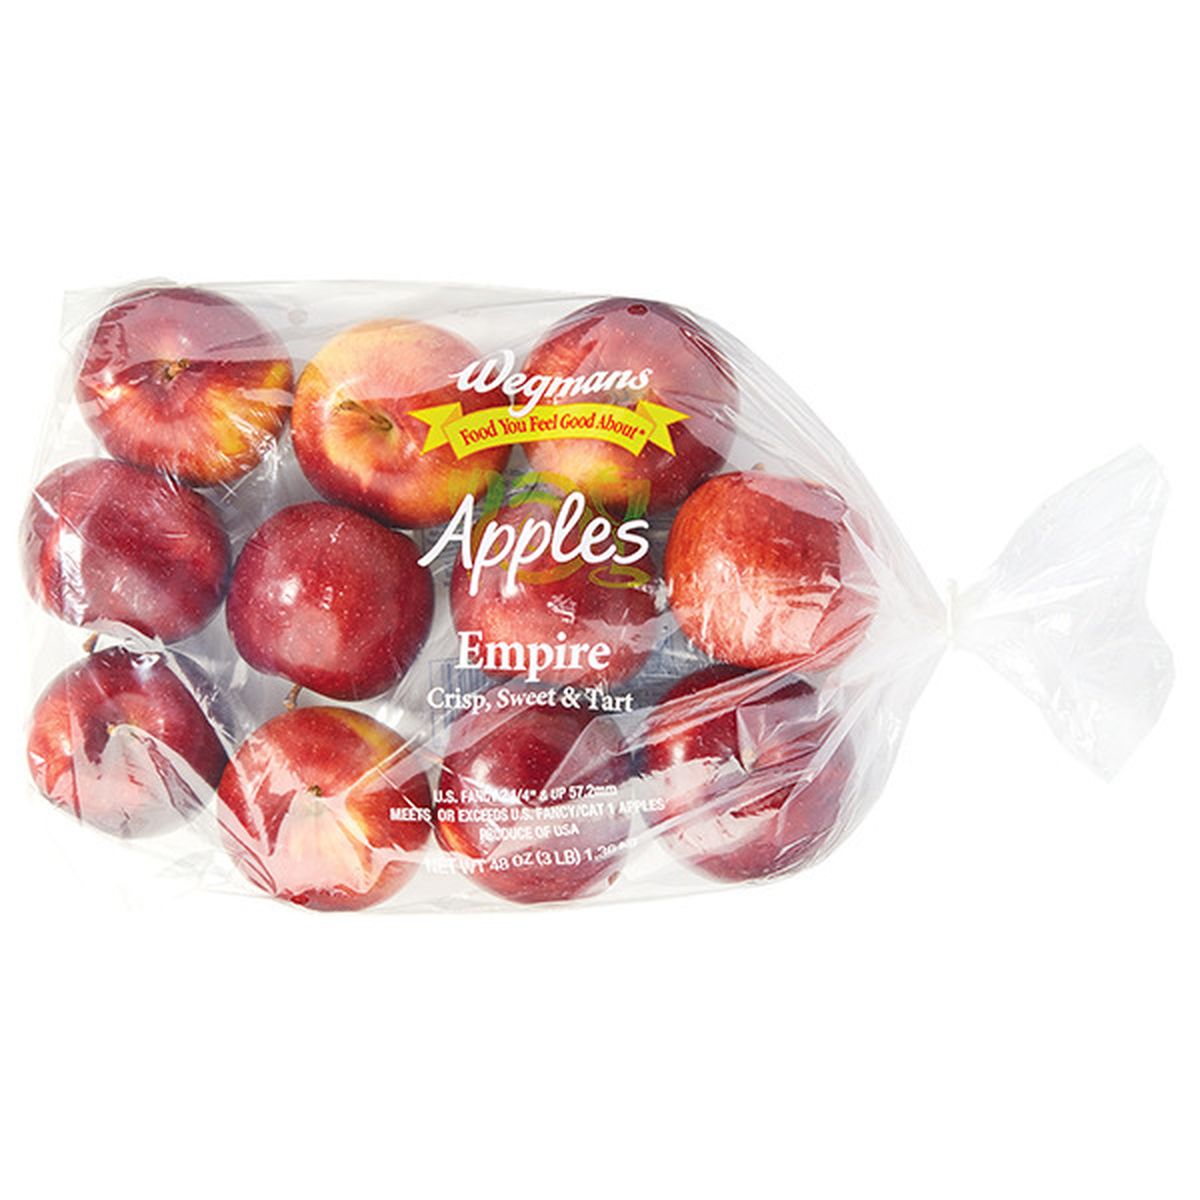 Calories in Wegmans Empire Apples, Bagged